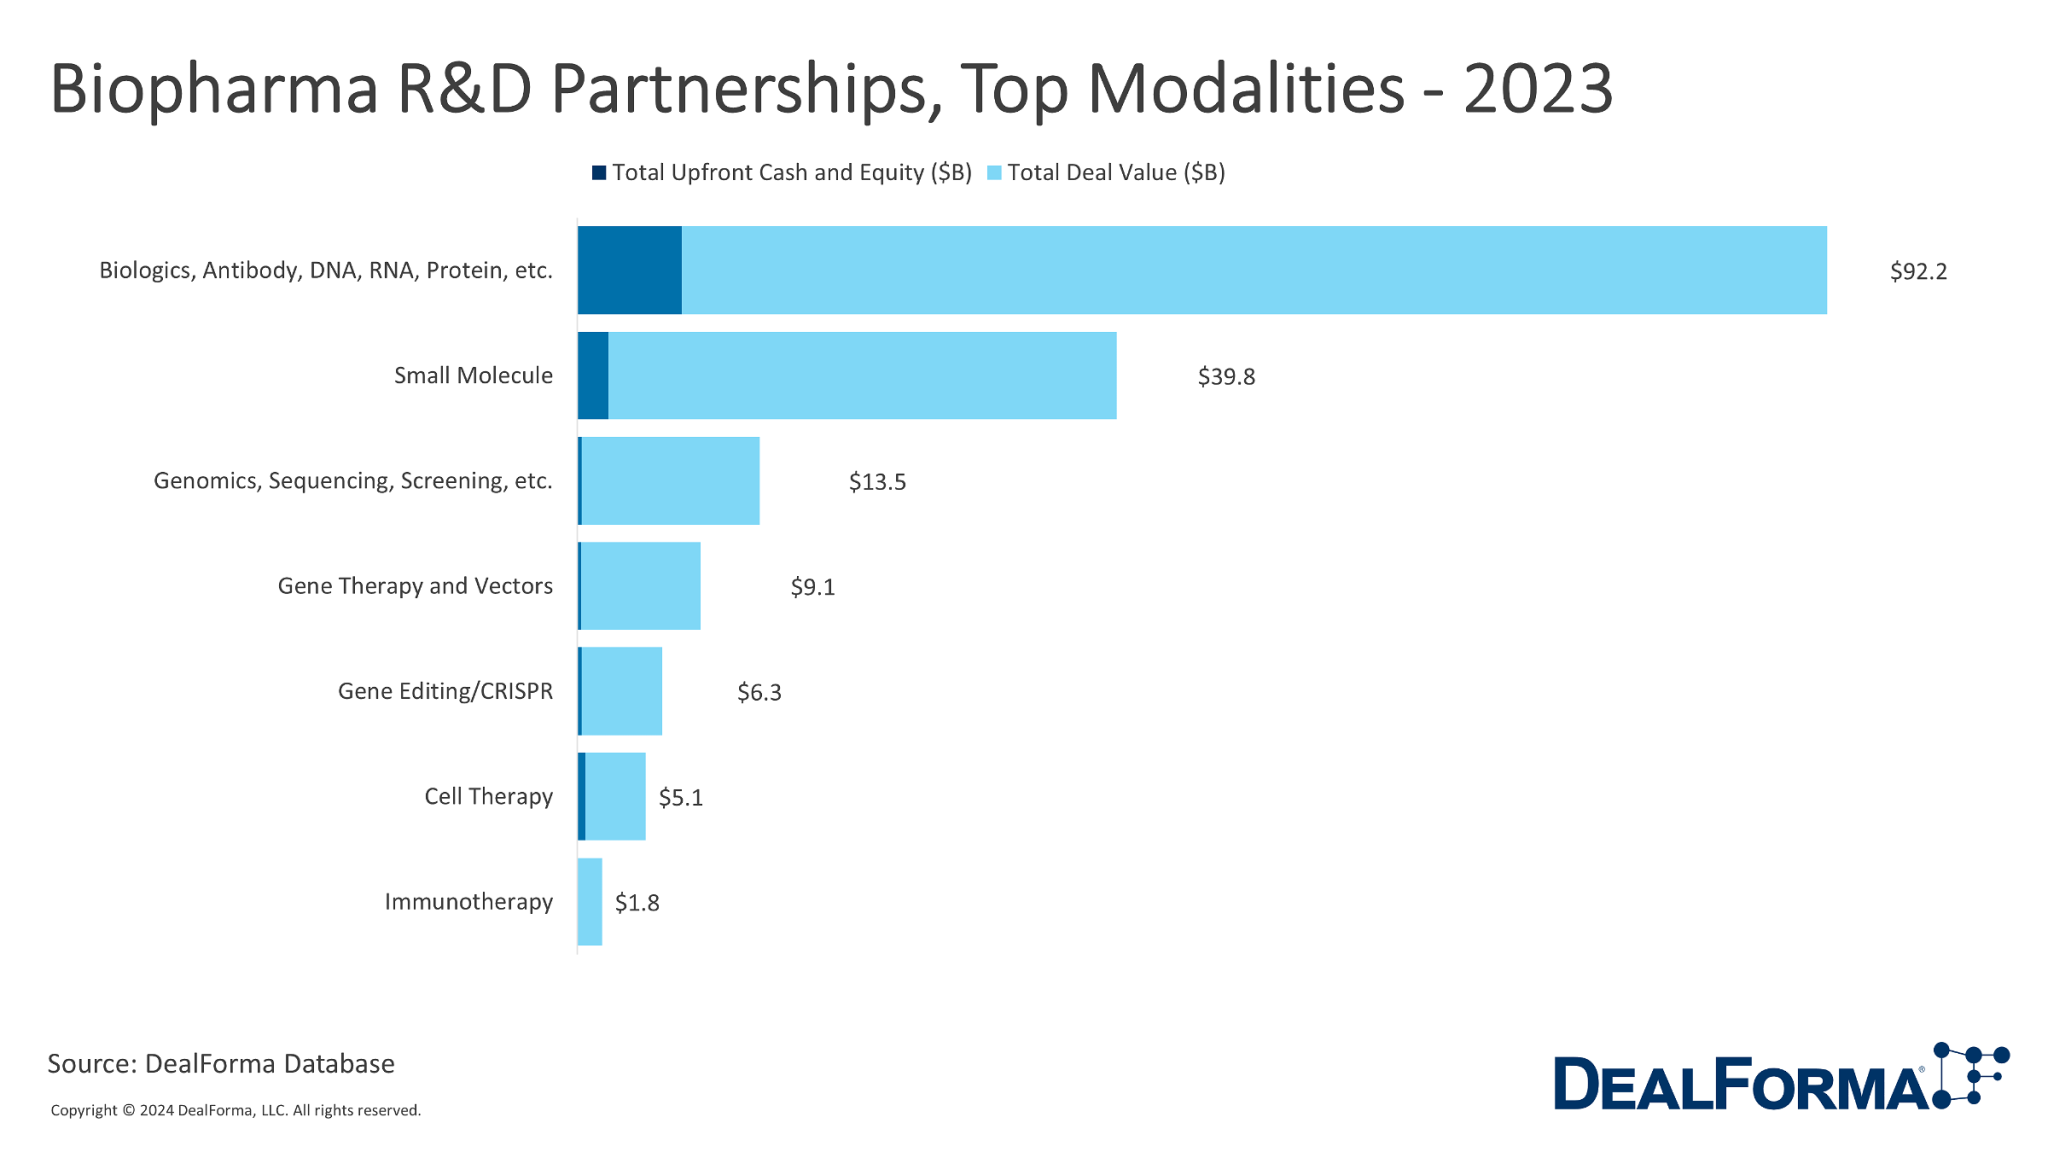 Leading Modalities In Biopharma RD Partnerships 2023